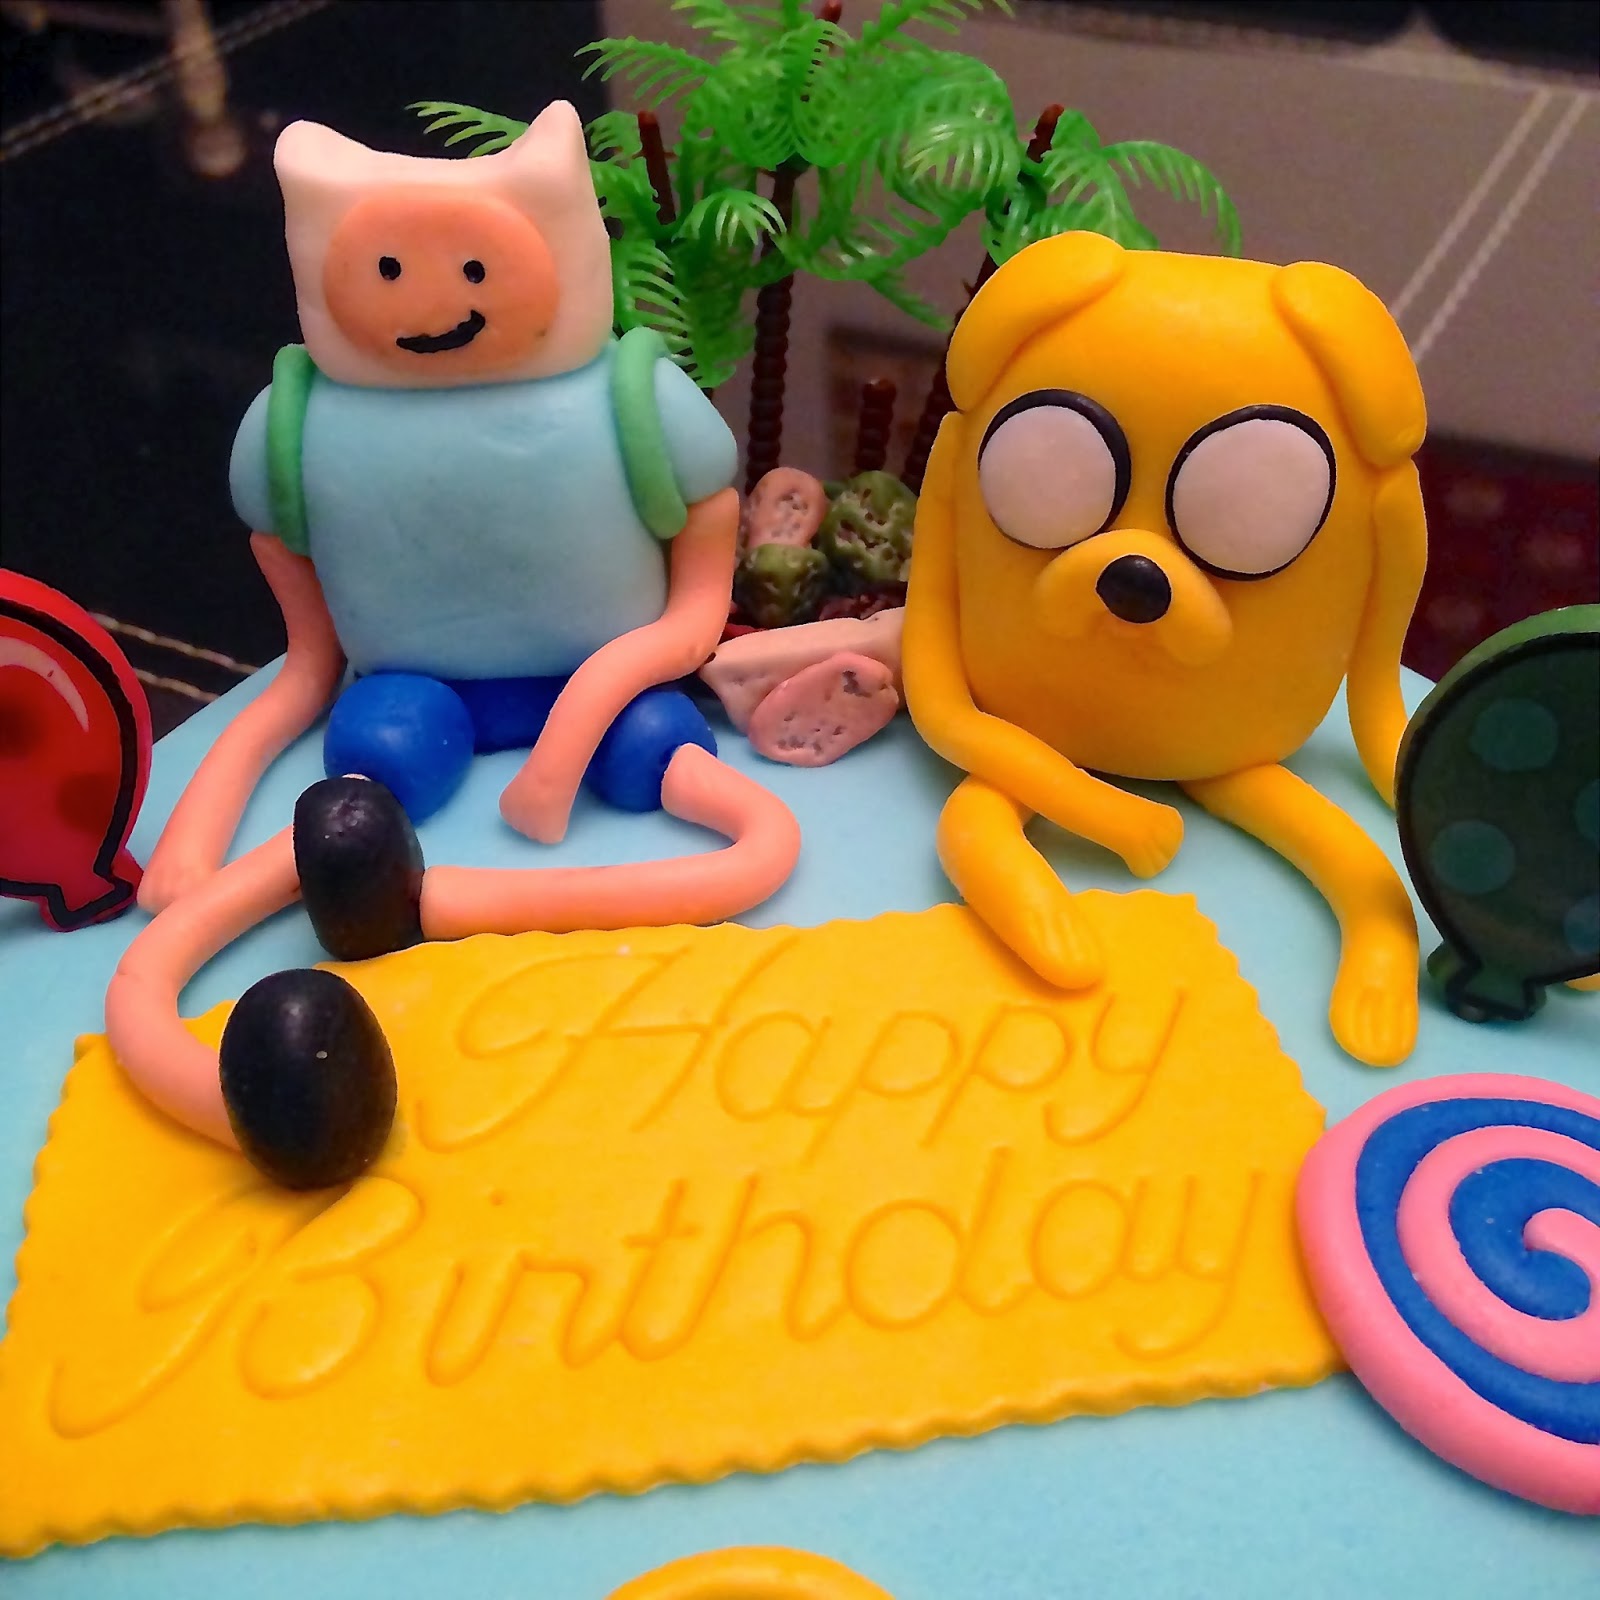 signature cupcakes: Cartoon Character Birthday Cake